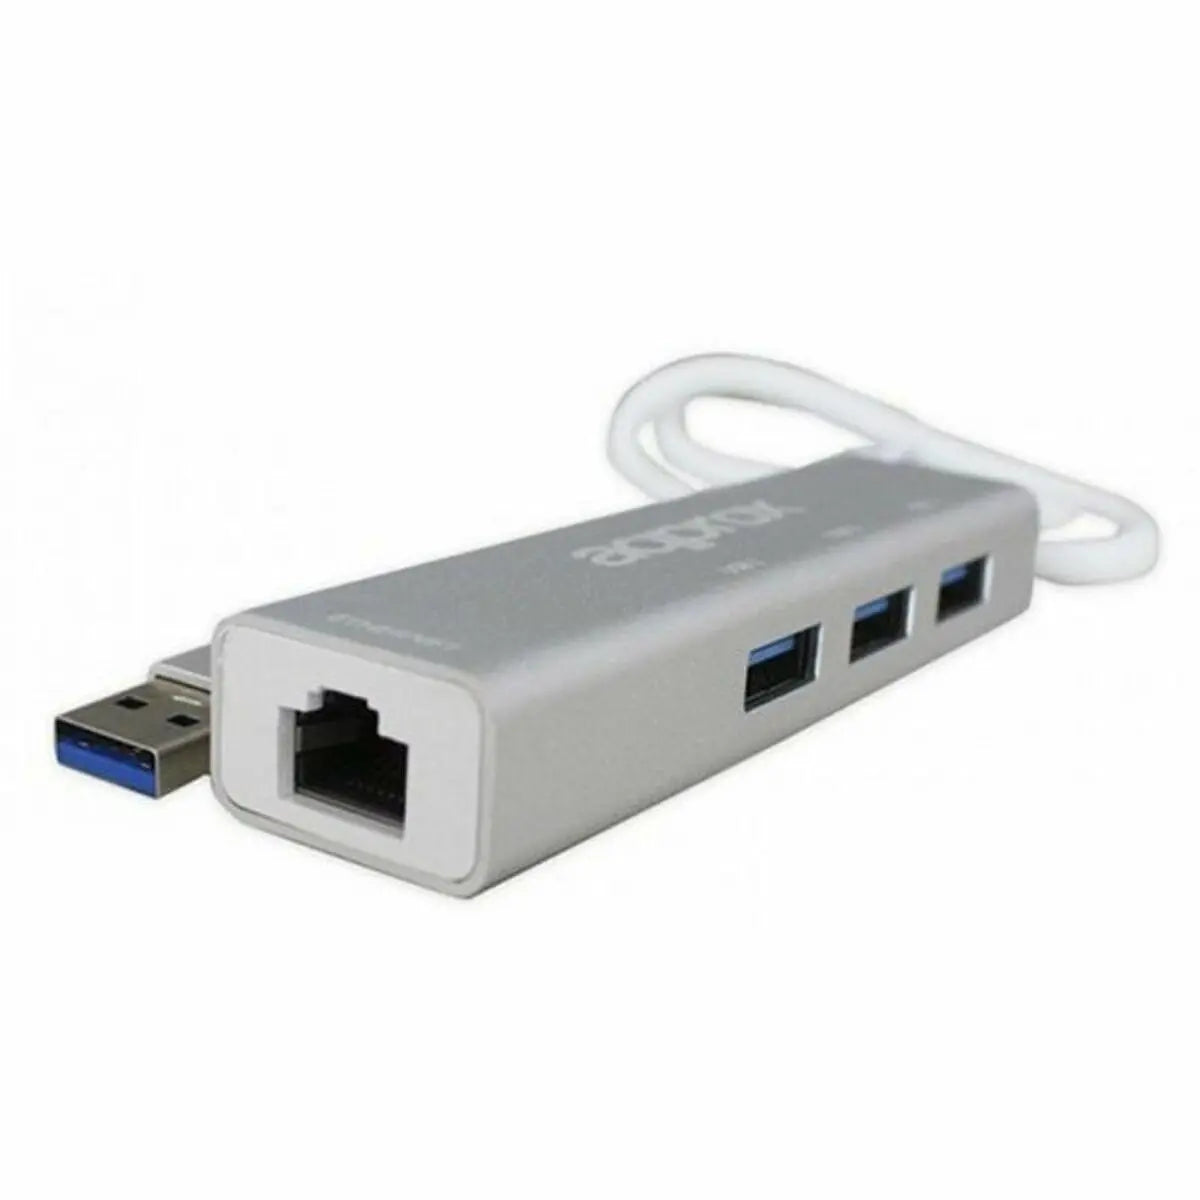 Network Adaptor approx! APPC07GHUB LAN 10/100/1000 USB 3.0 Grey - IGSI Europe Ltd